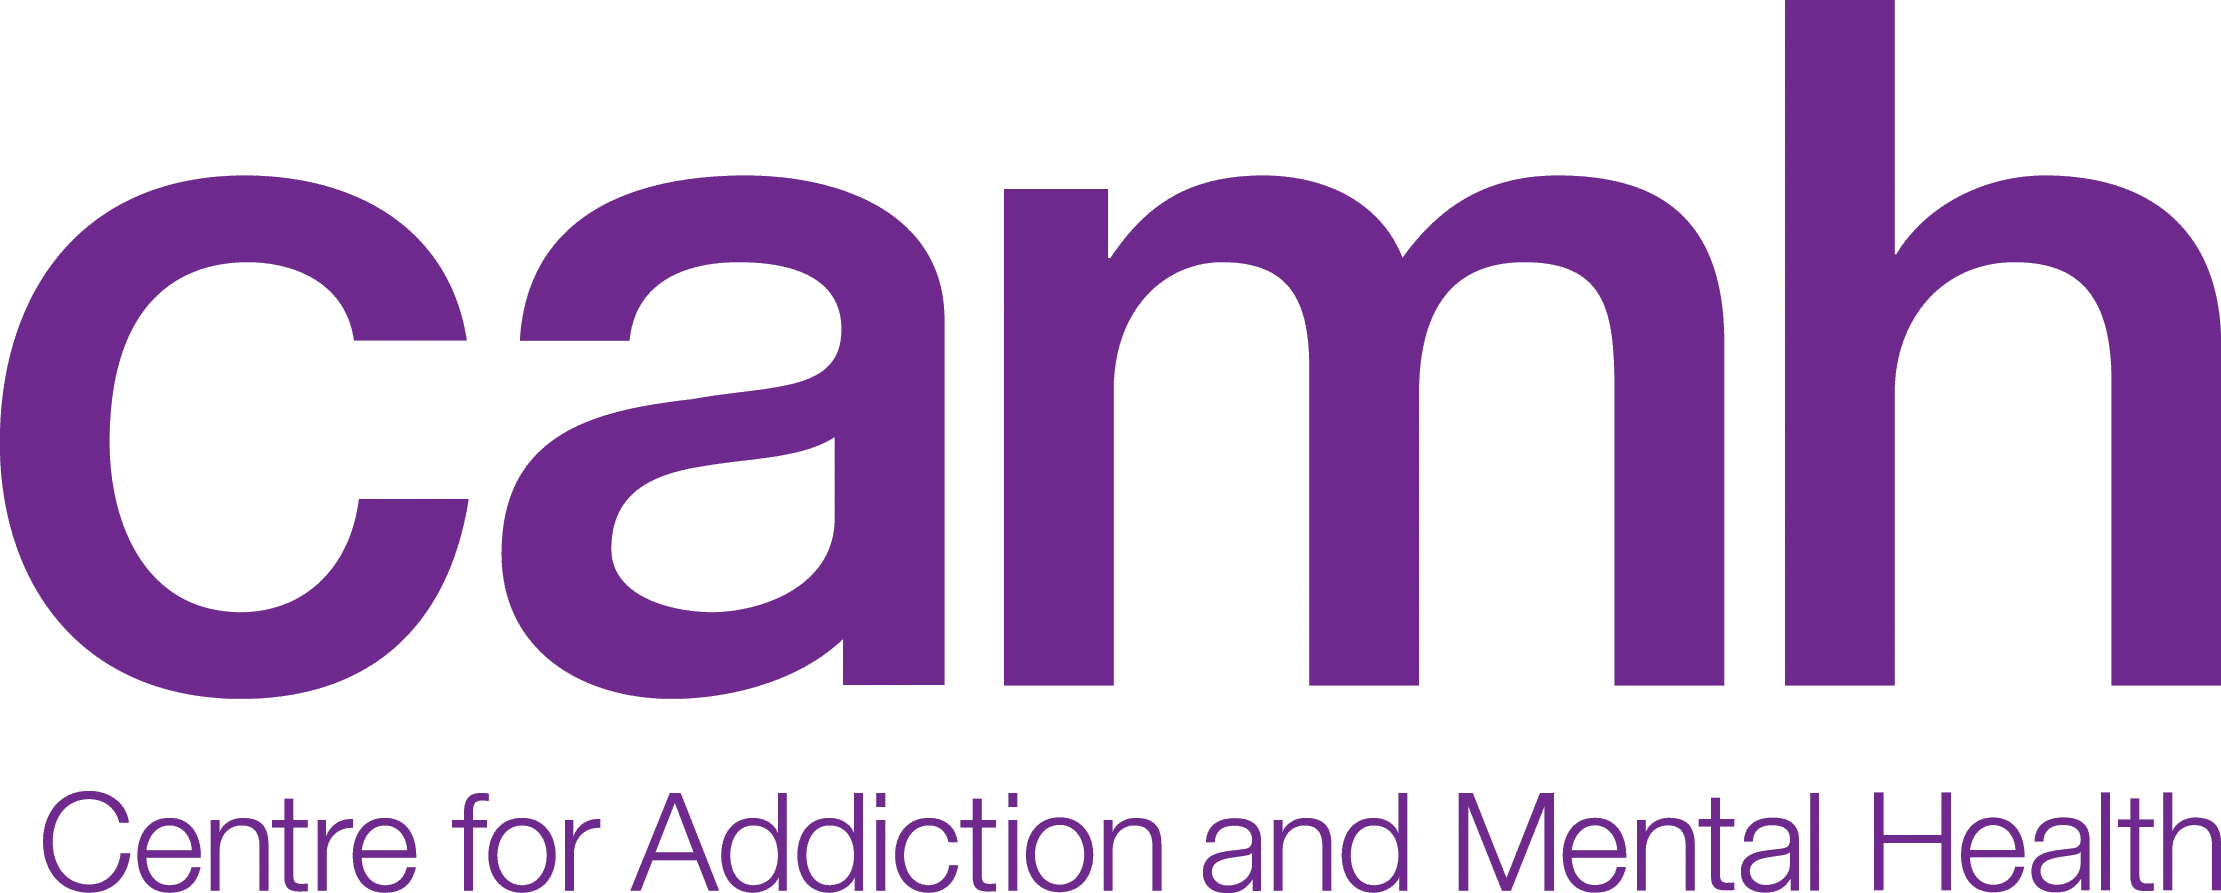 camh_logo_purple